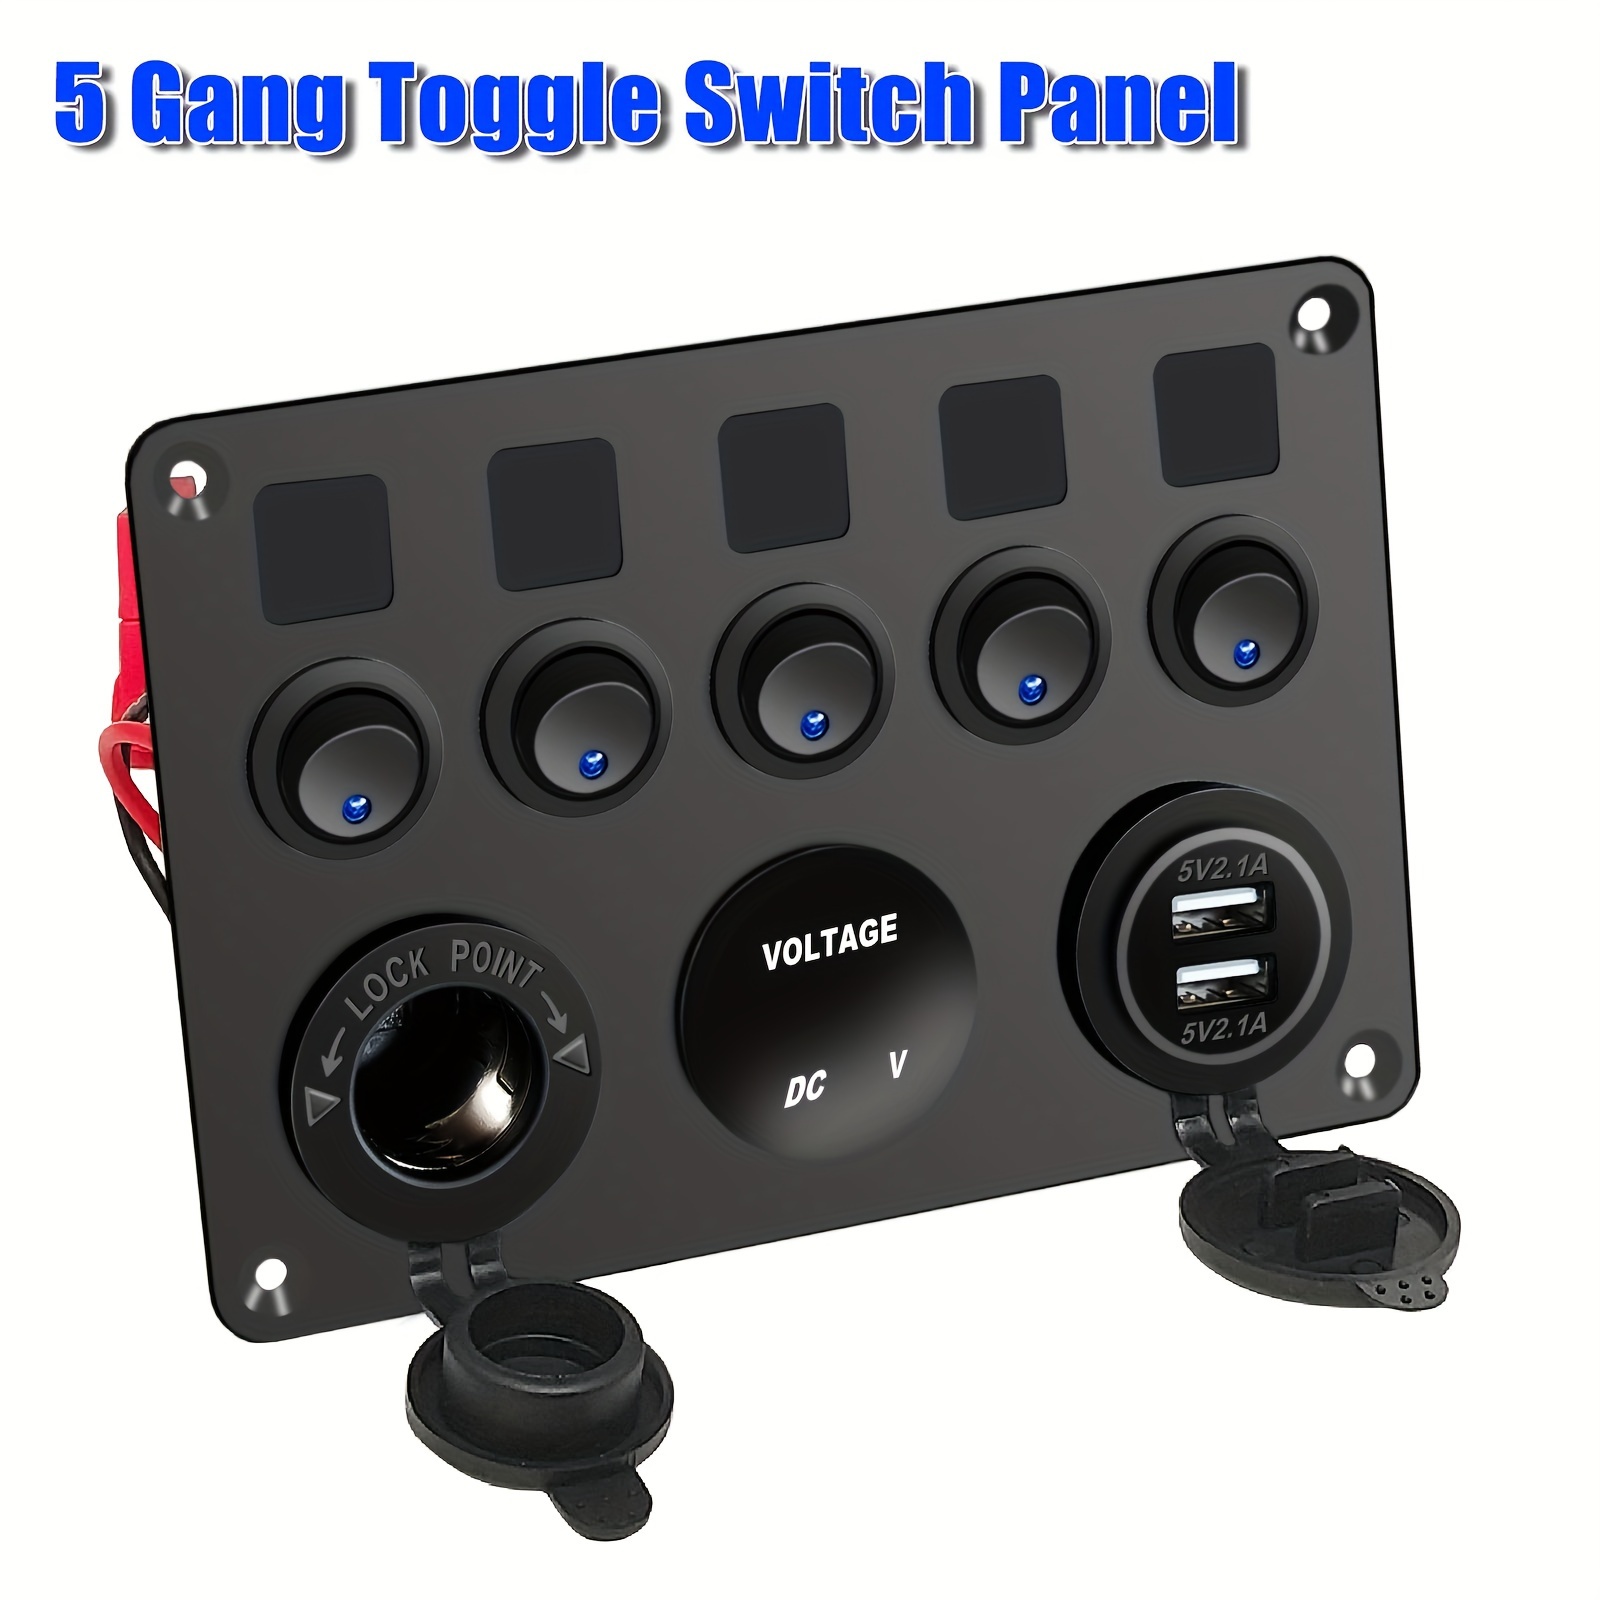 12v 1 4 Gang Toggle Switch Panel Usb Car Boat Marine Blue - Temu